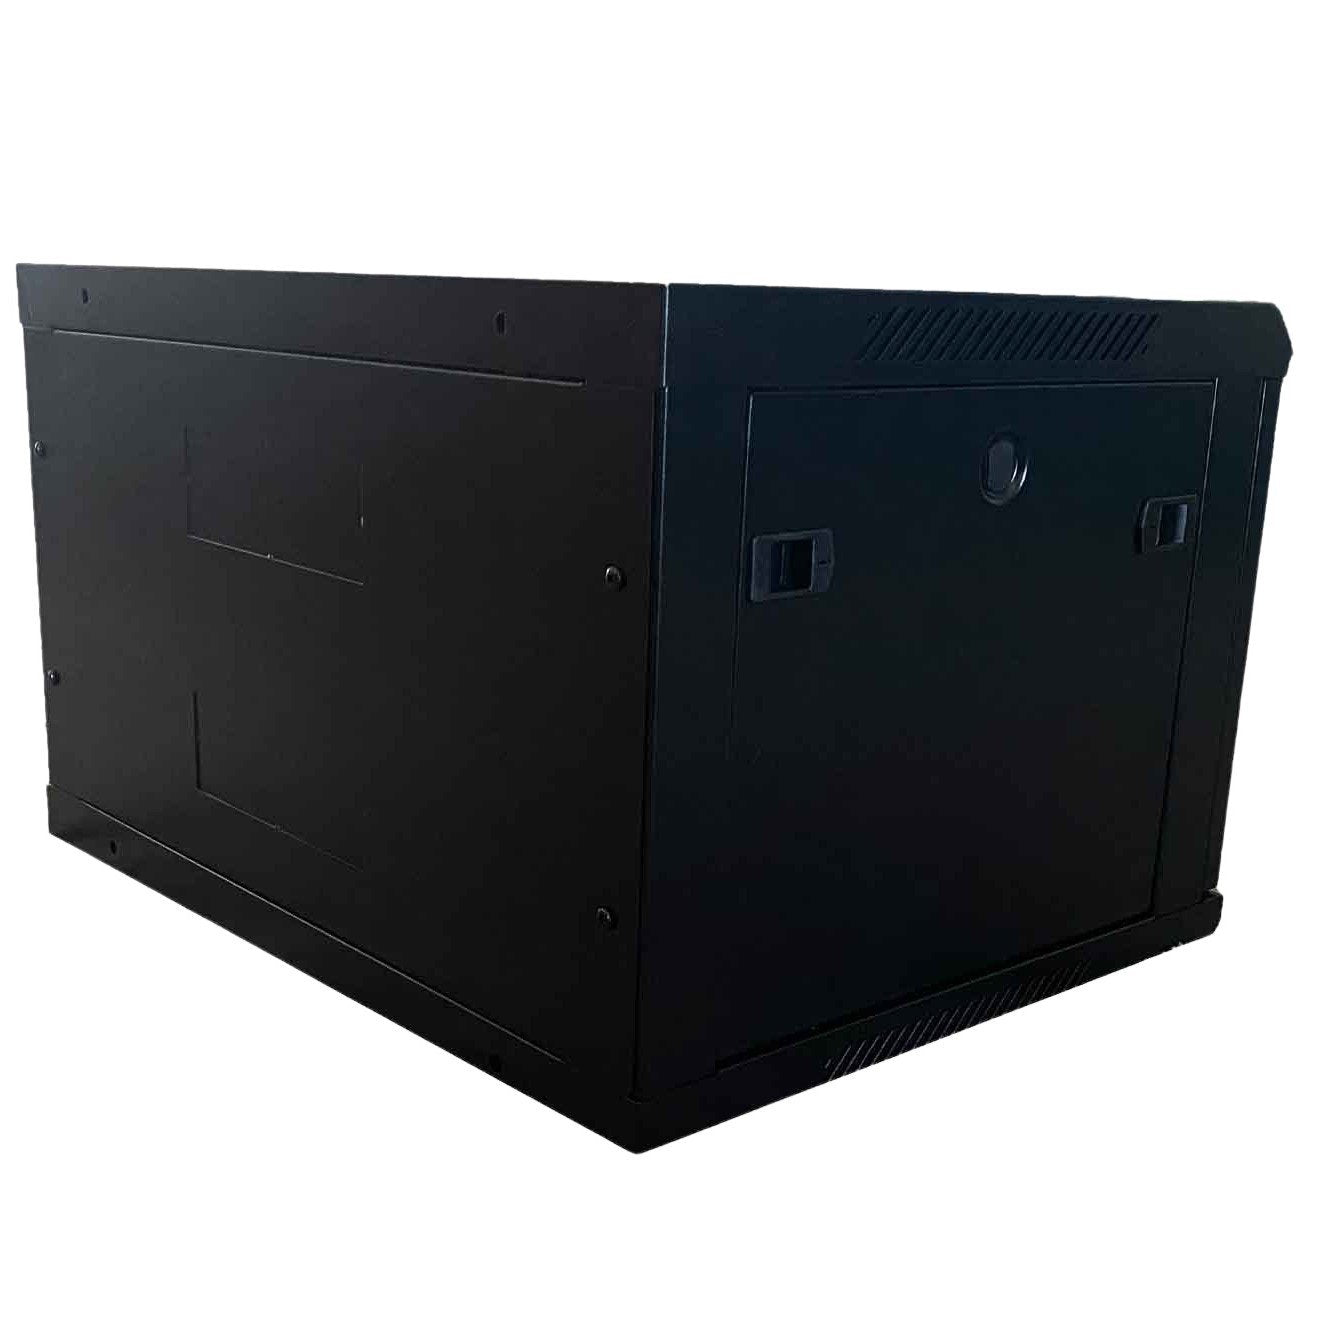 Zankap 6RU 600mm Deep Wall Mount Cabinet With 1 x Fixed Shelf, 10 x Cage Nuts, Lockable Glass Front Door, Rapid Build Flatpack